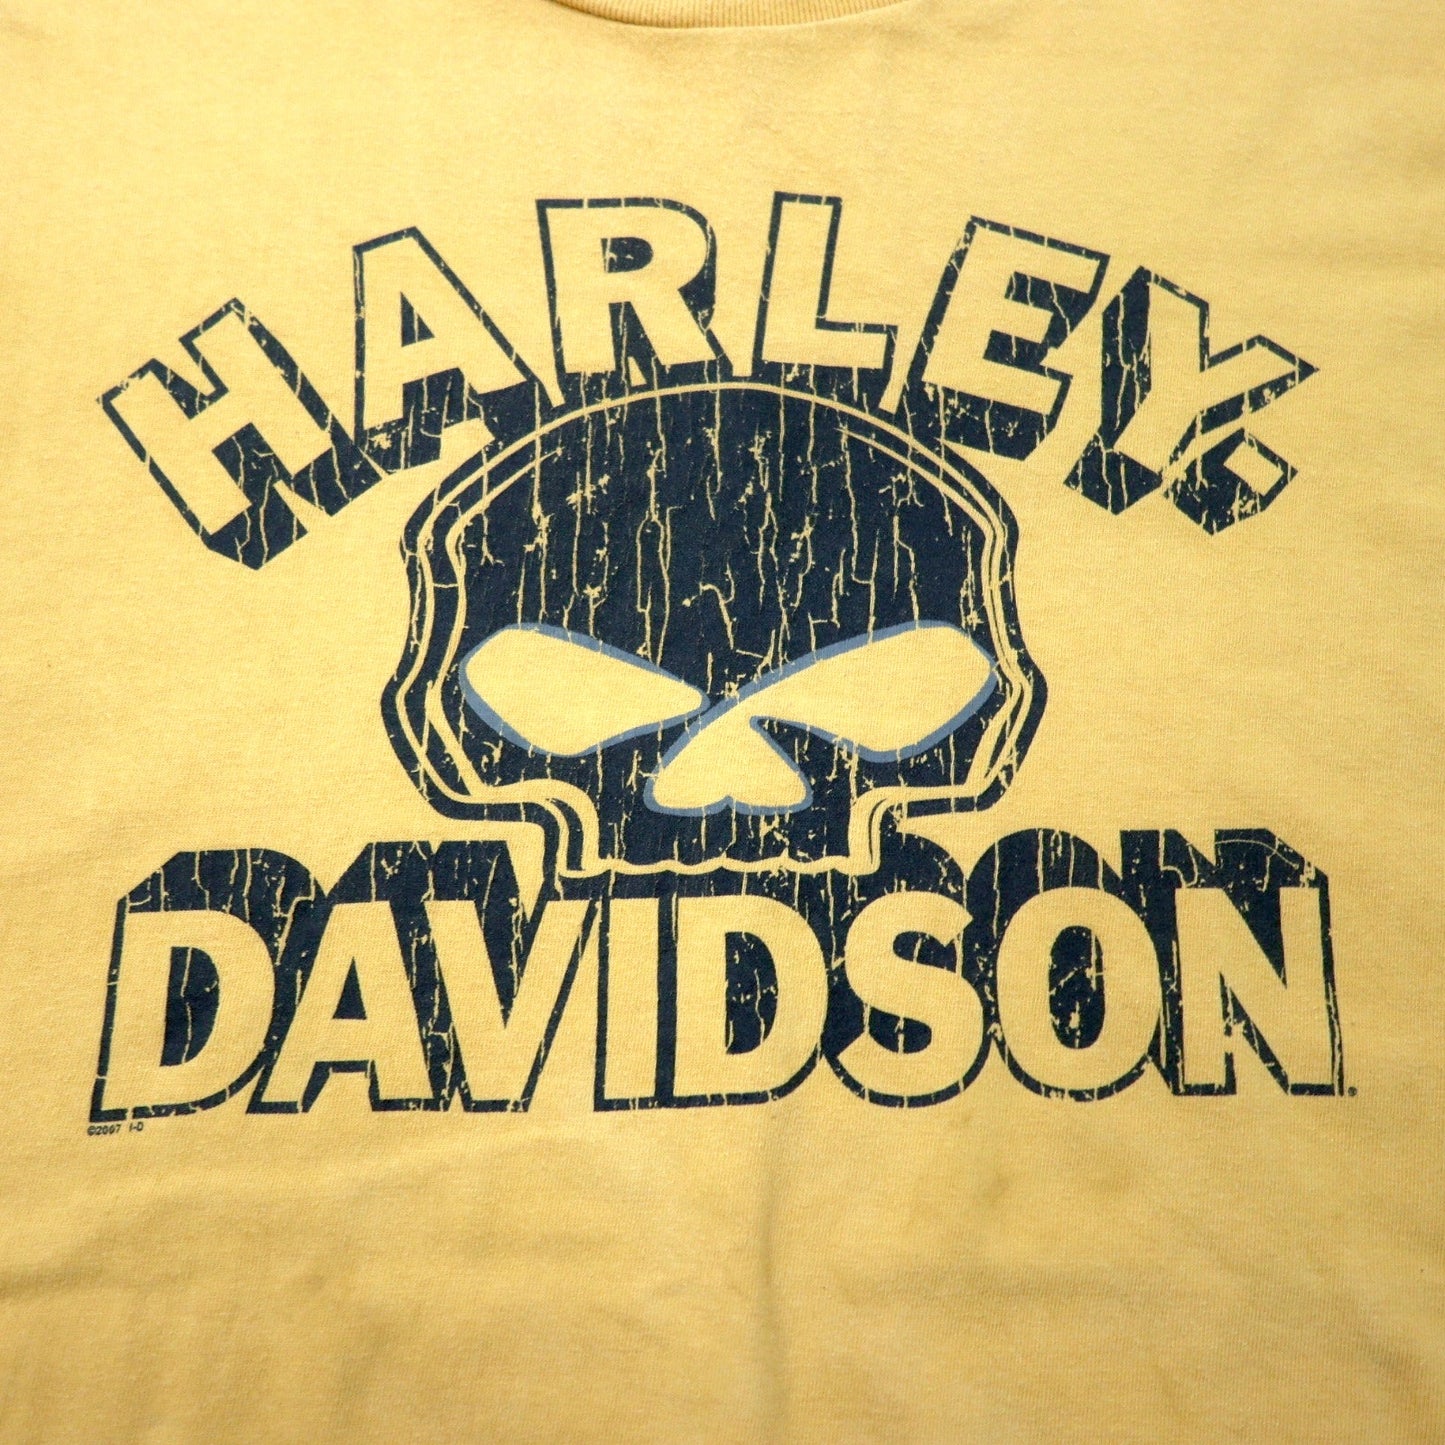 HARLEY DAVIDSON スカル ロゴプリント Tシャツ 4XL イエロー コットン ビッグサイズ DAYTONA BEACH, FL